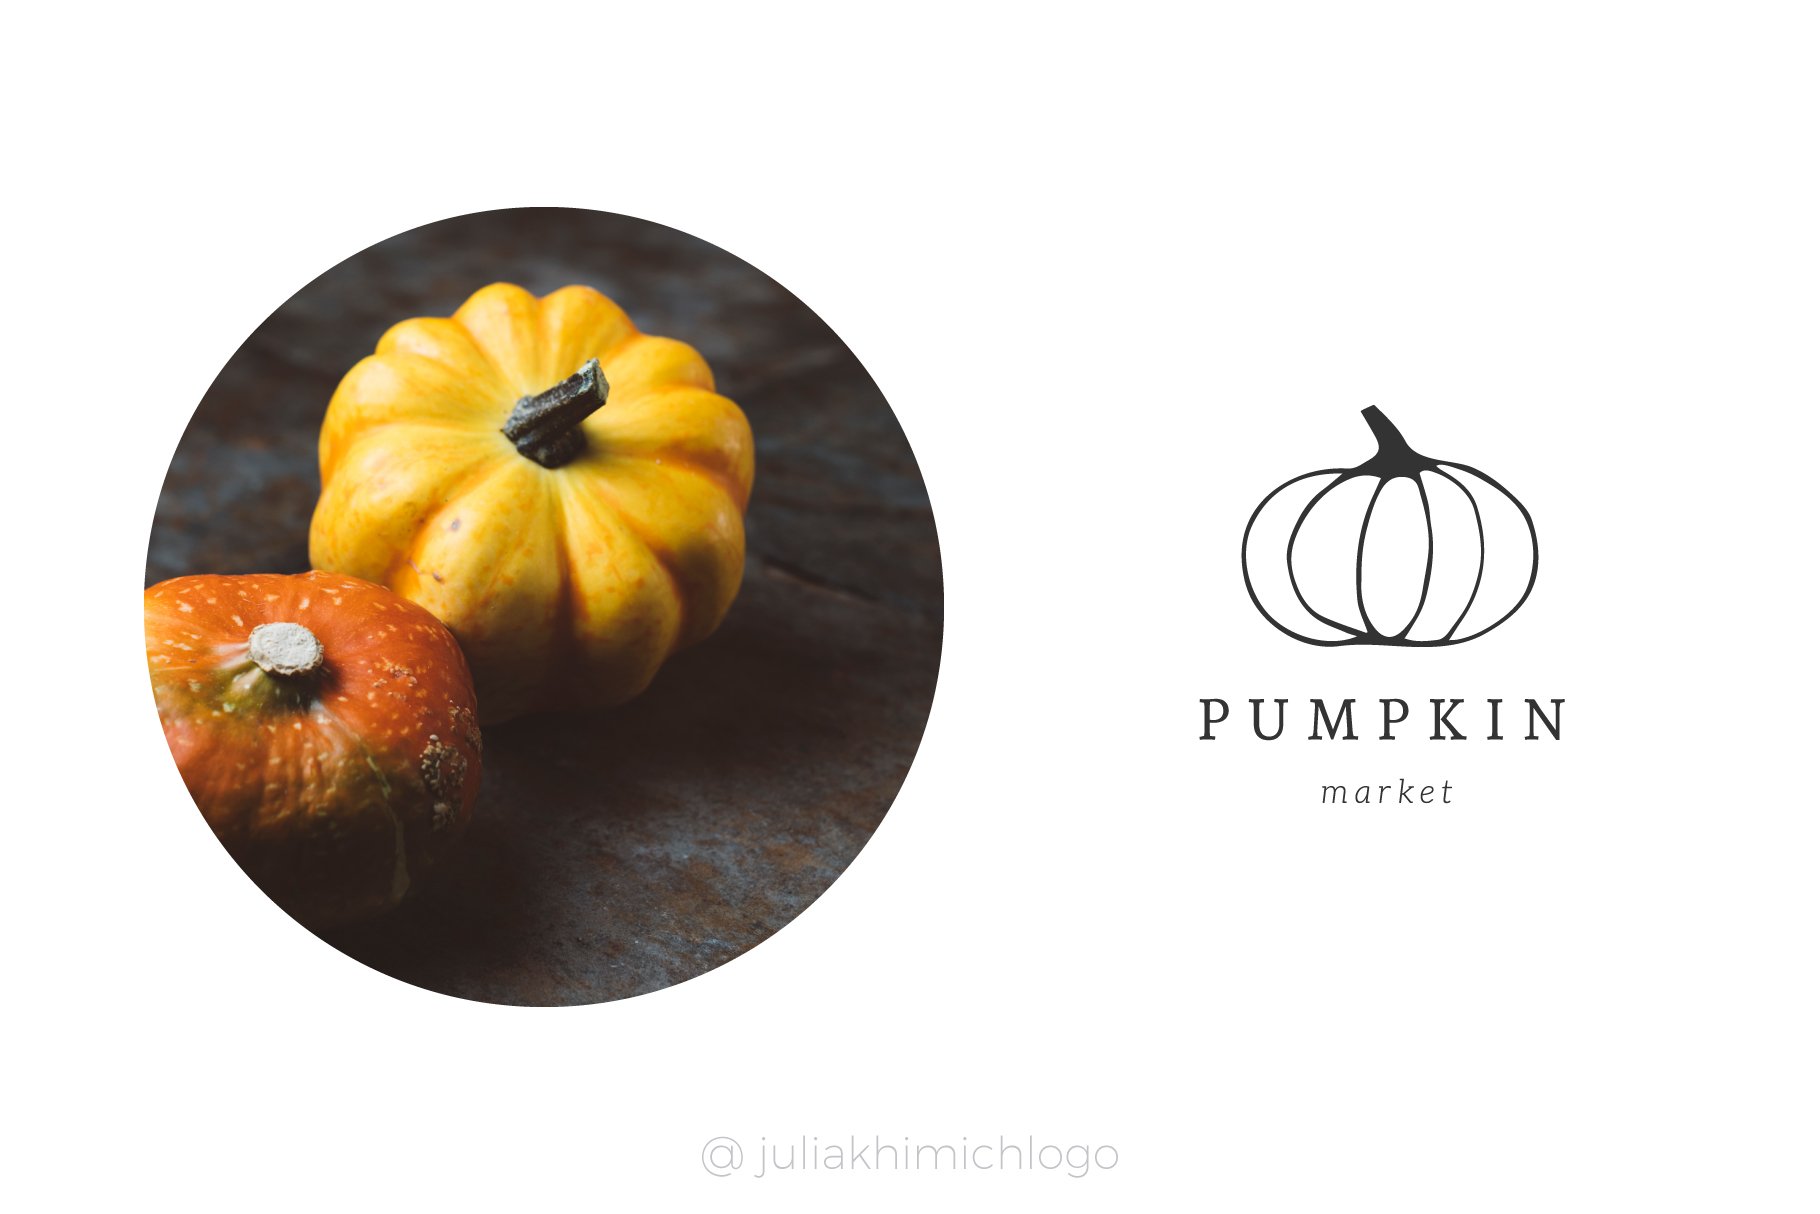 Delicate logo for a pumpkin brand.